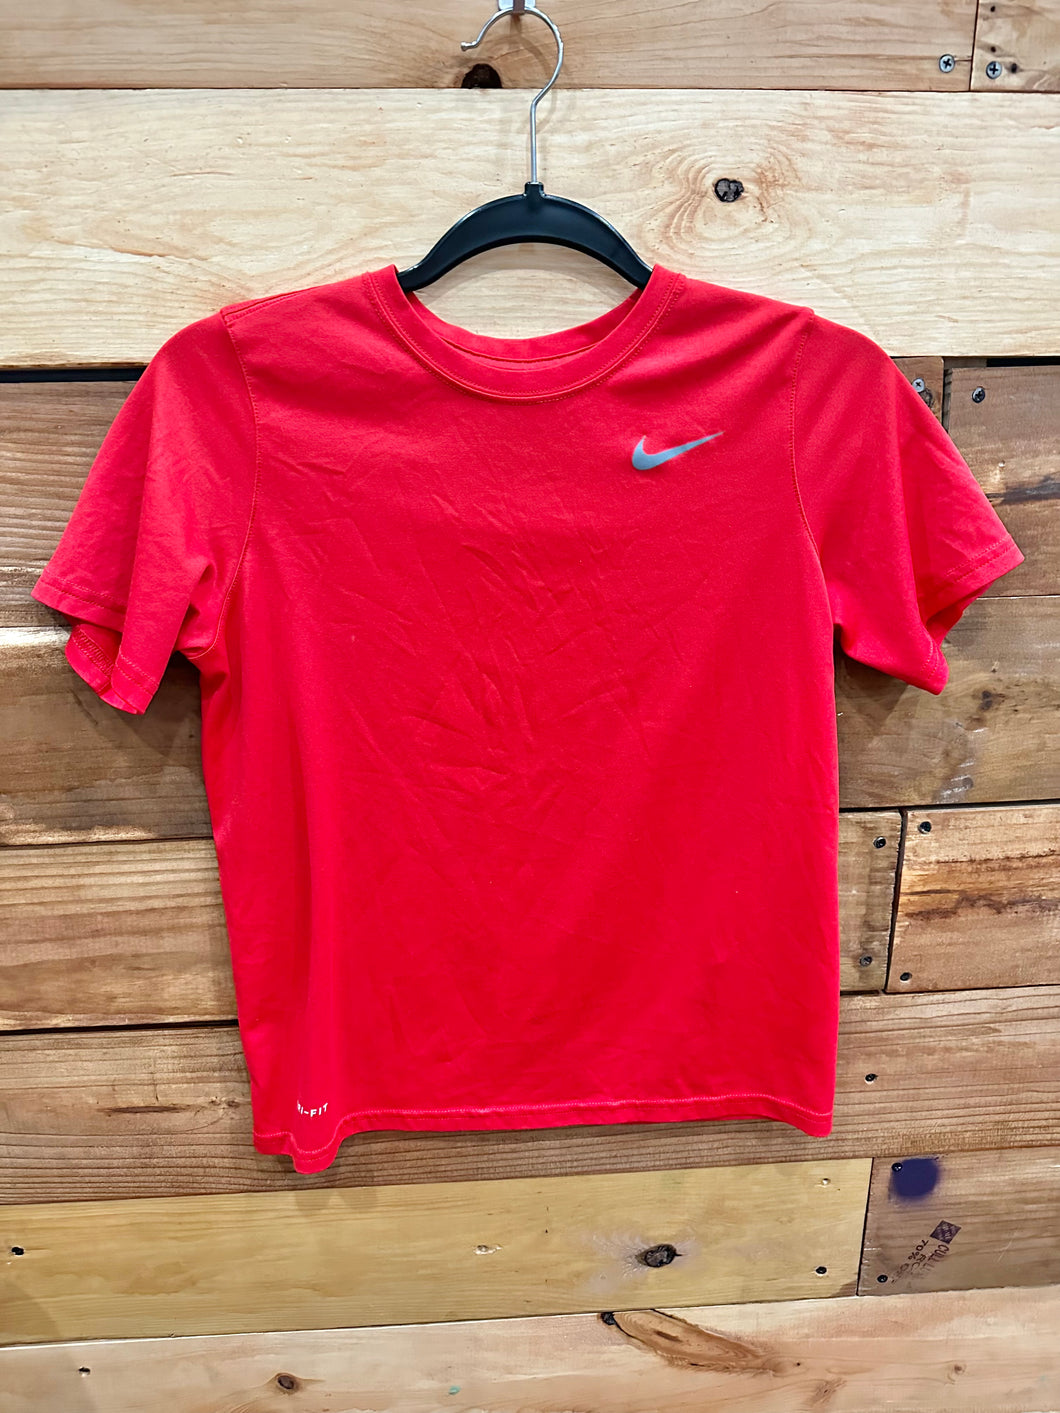 Nike Red Shirt Size 14-16